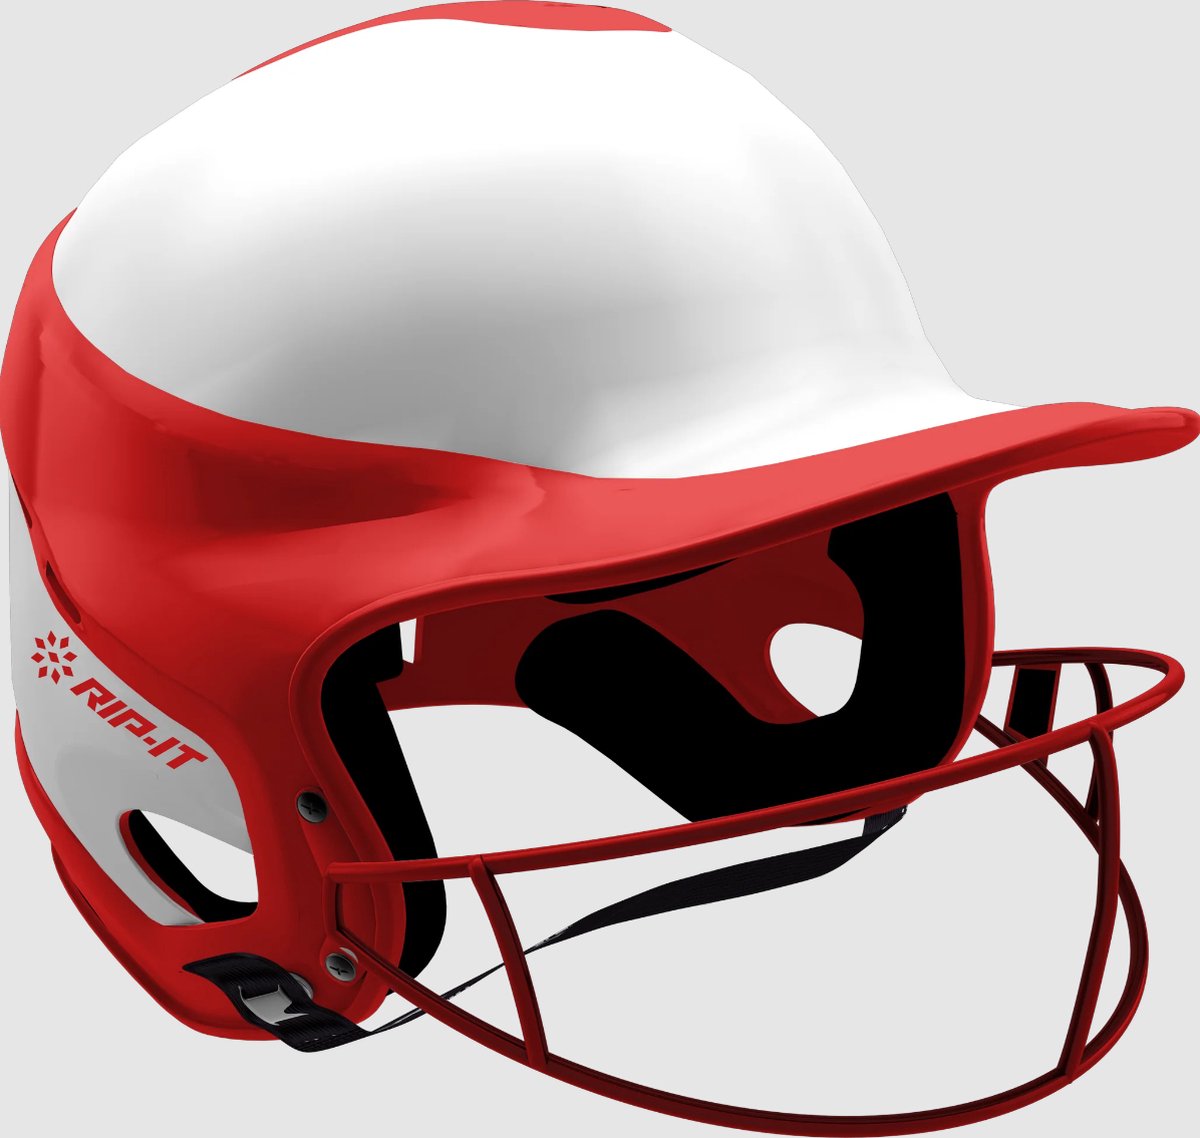 RIP-IT Vision Pro Softball Batting Helmet XL Scarlet